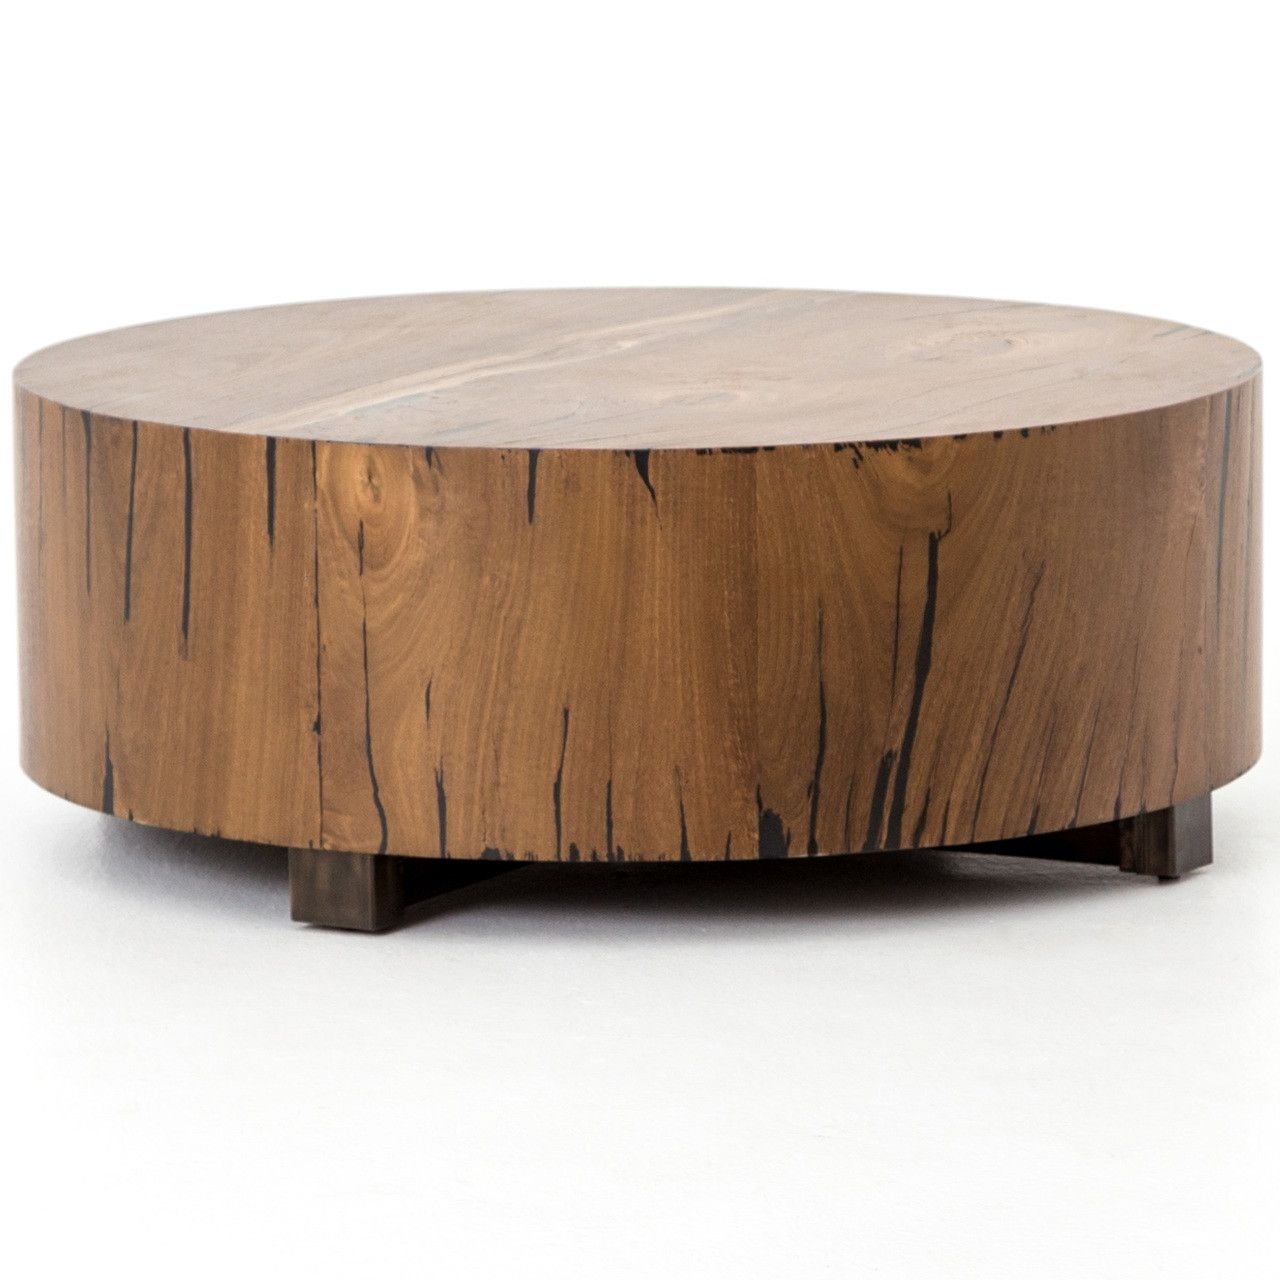 Hudson Round Natural Yukas Wood Block Coffee Table | Zin Home With Coffee Tables With Round Wooden Tops (View 4 of 15)